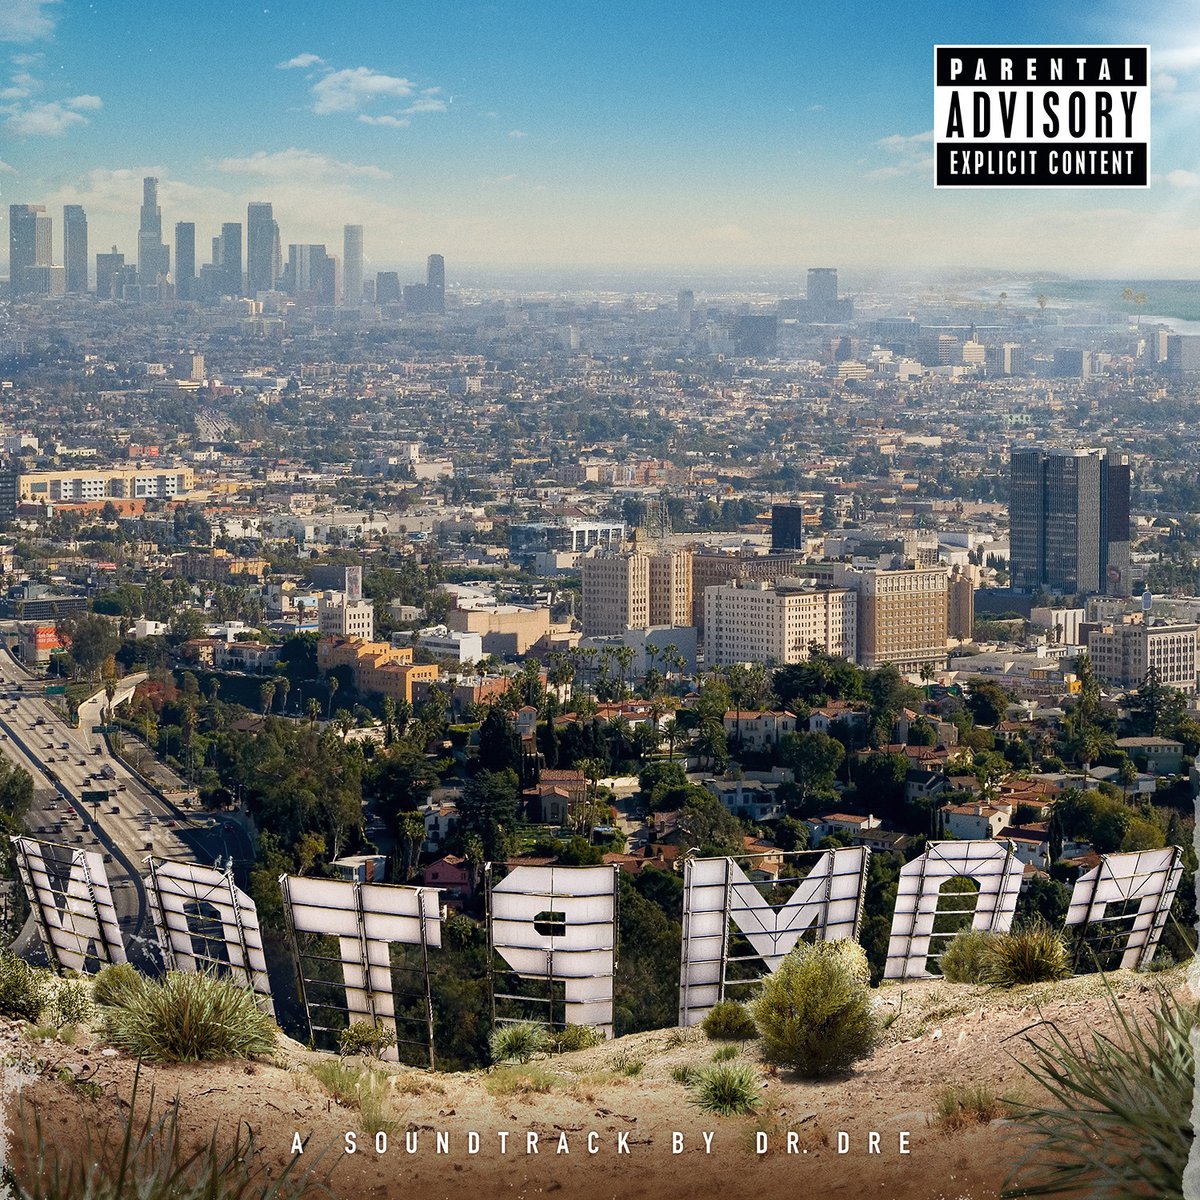 Dr. Dre - Compton (2015) #WestCoastHipHop #GangstaRap #PopRap #Trap #ConsciousHipHop #HipHop #hiphopculture #hiphopmusic #Compton #California #USA 🇺🇸 #10s #2010s #AftermathEntertainment